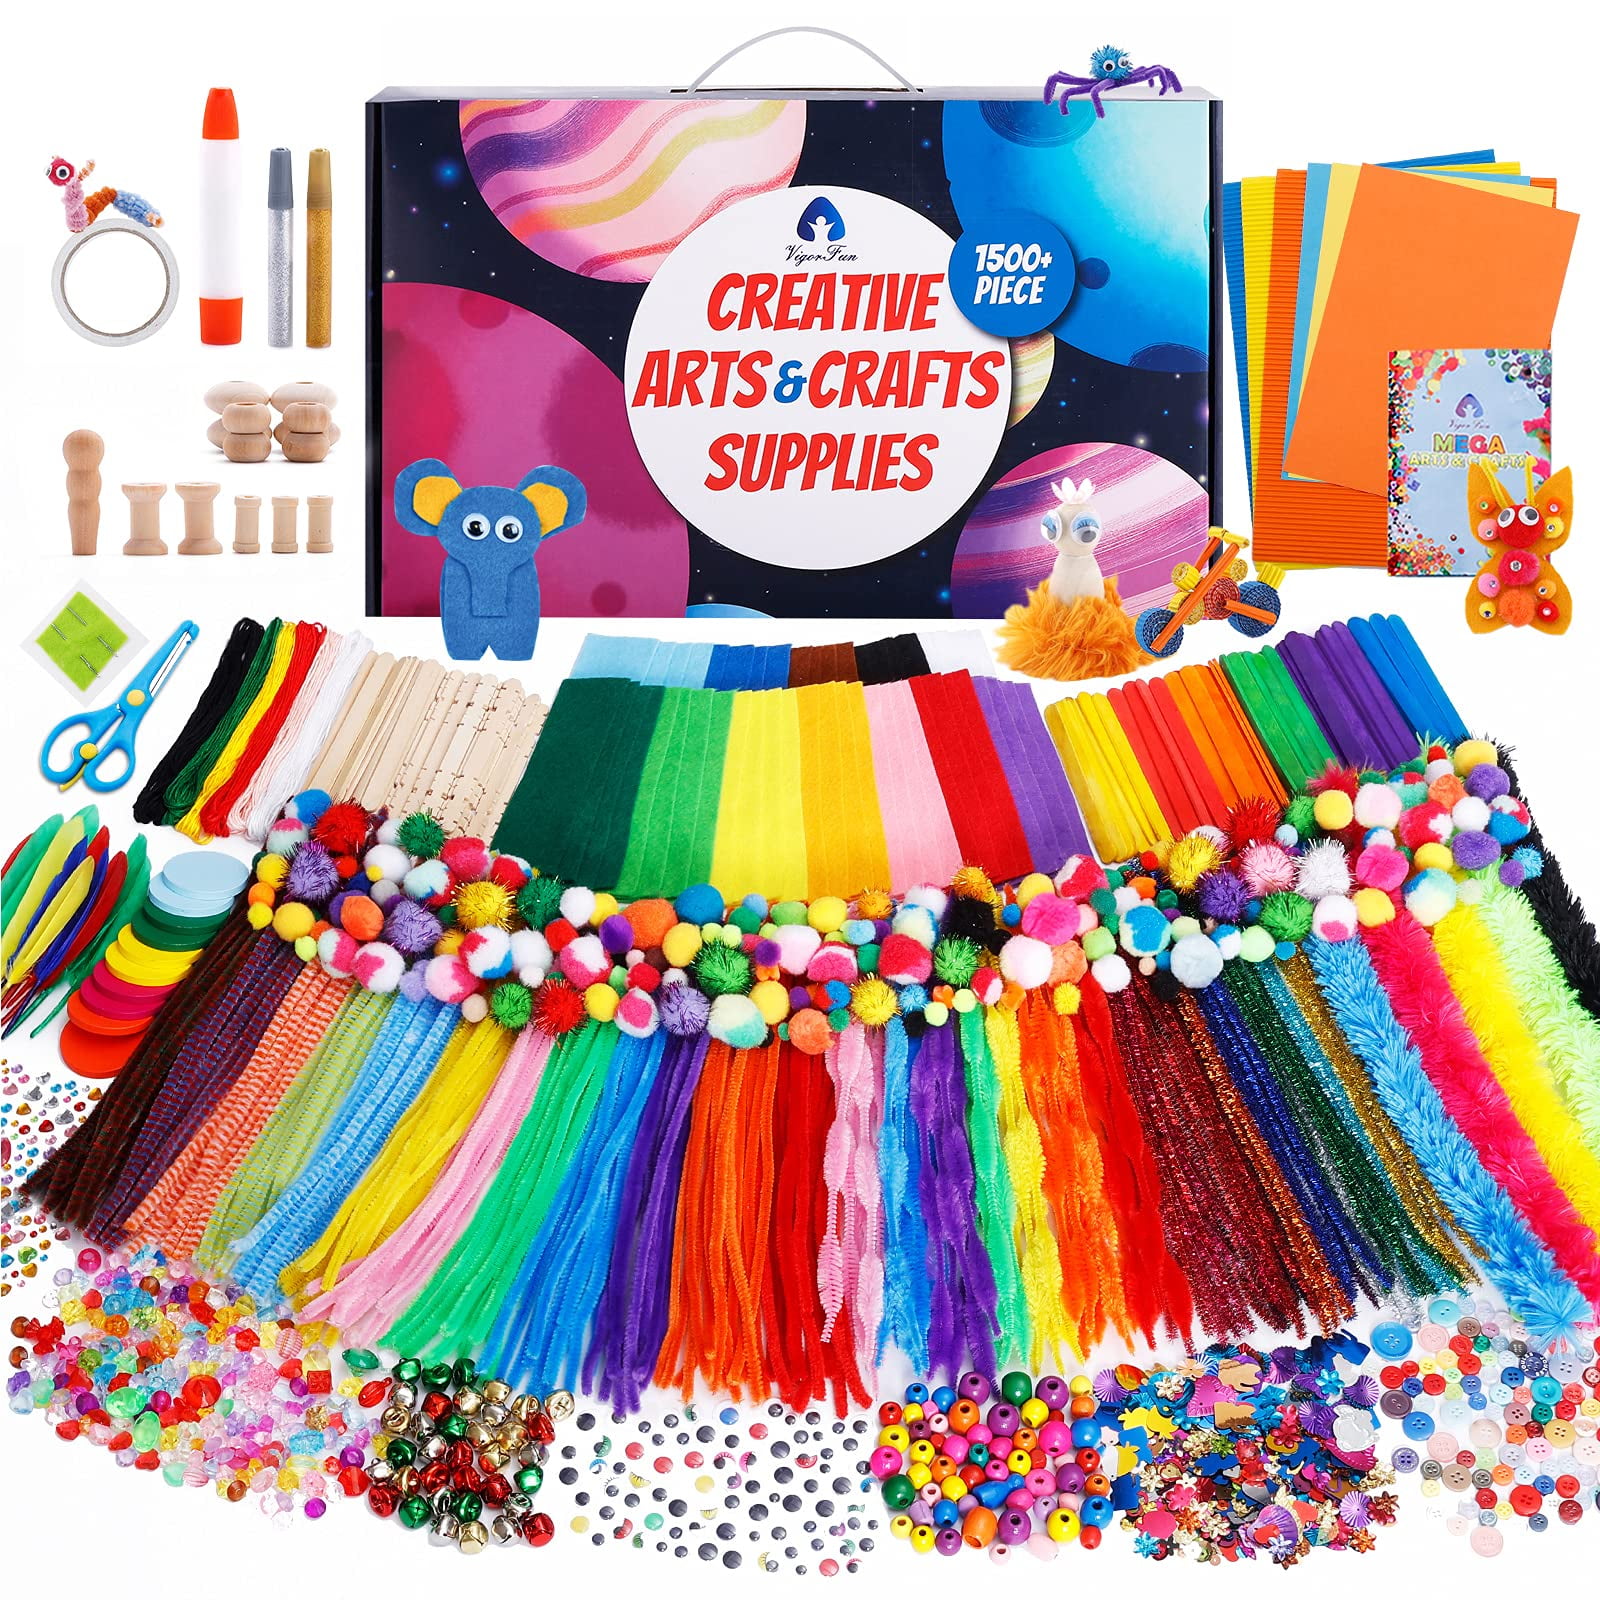 Vigorfun Arts and Crafts Supplies for Kids, 1500+ Piece DIY Craft